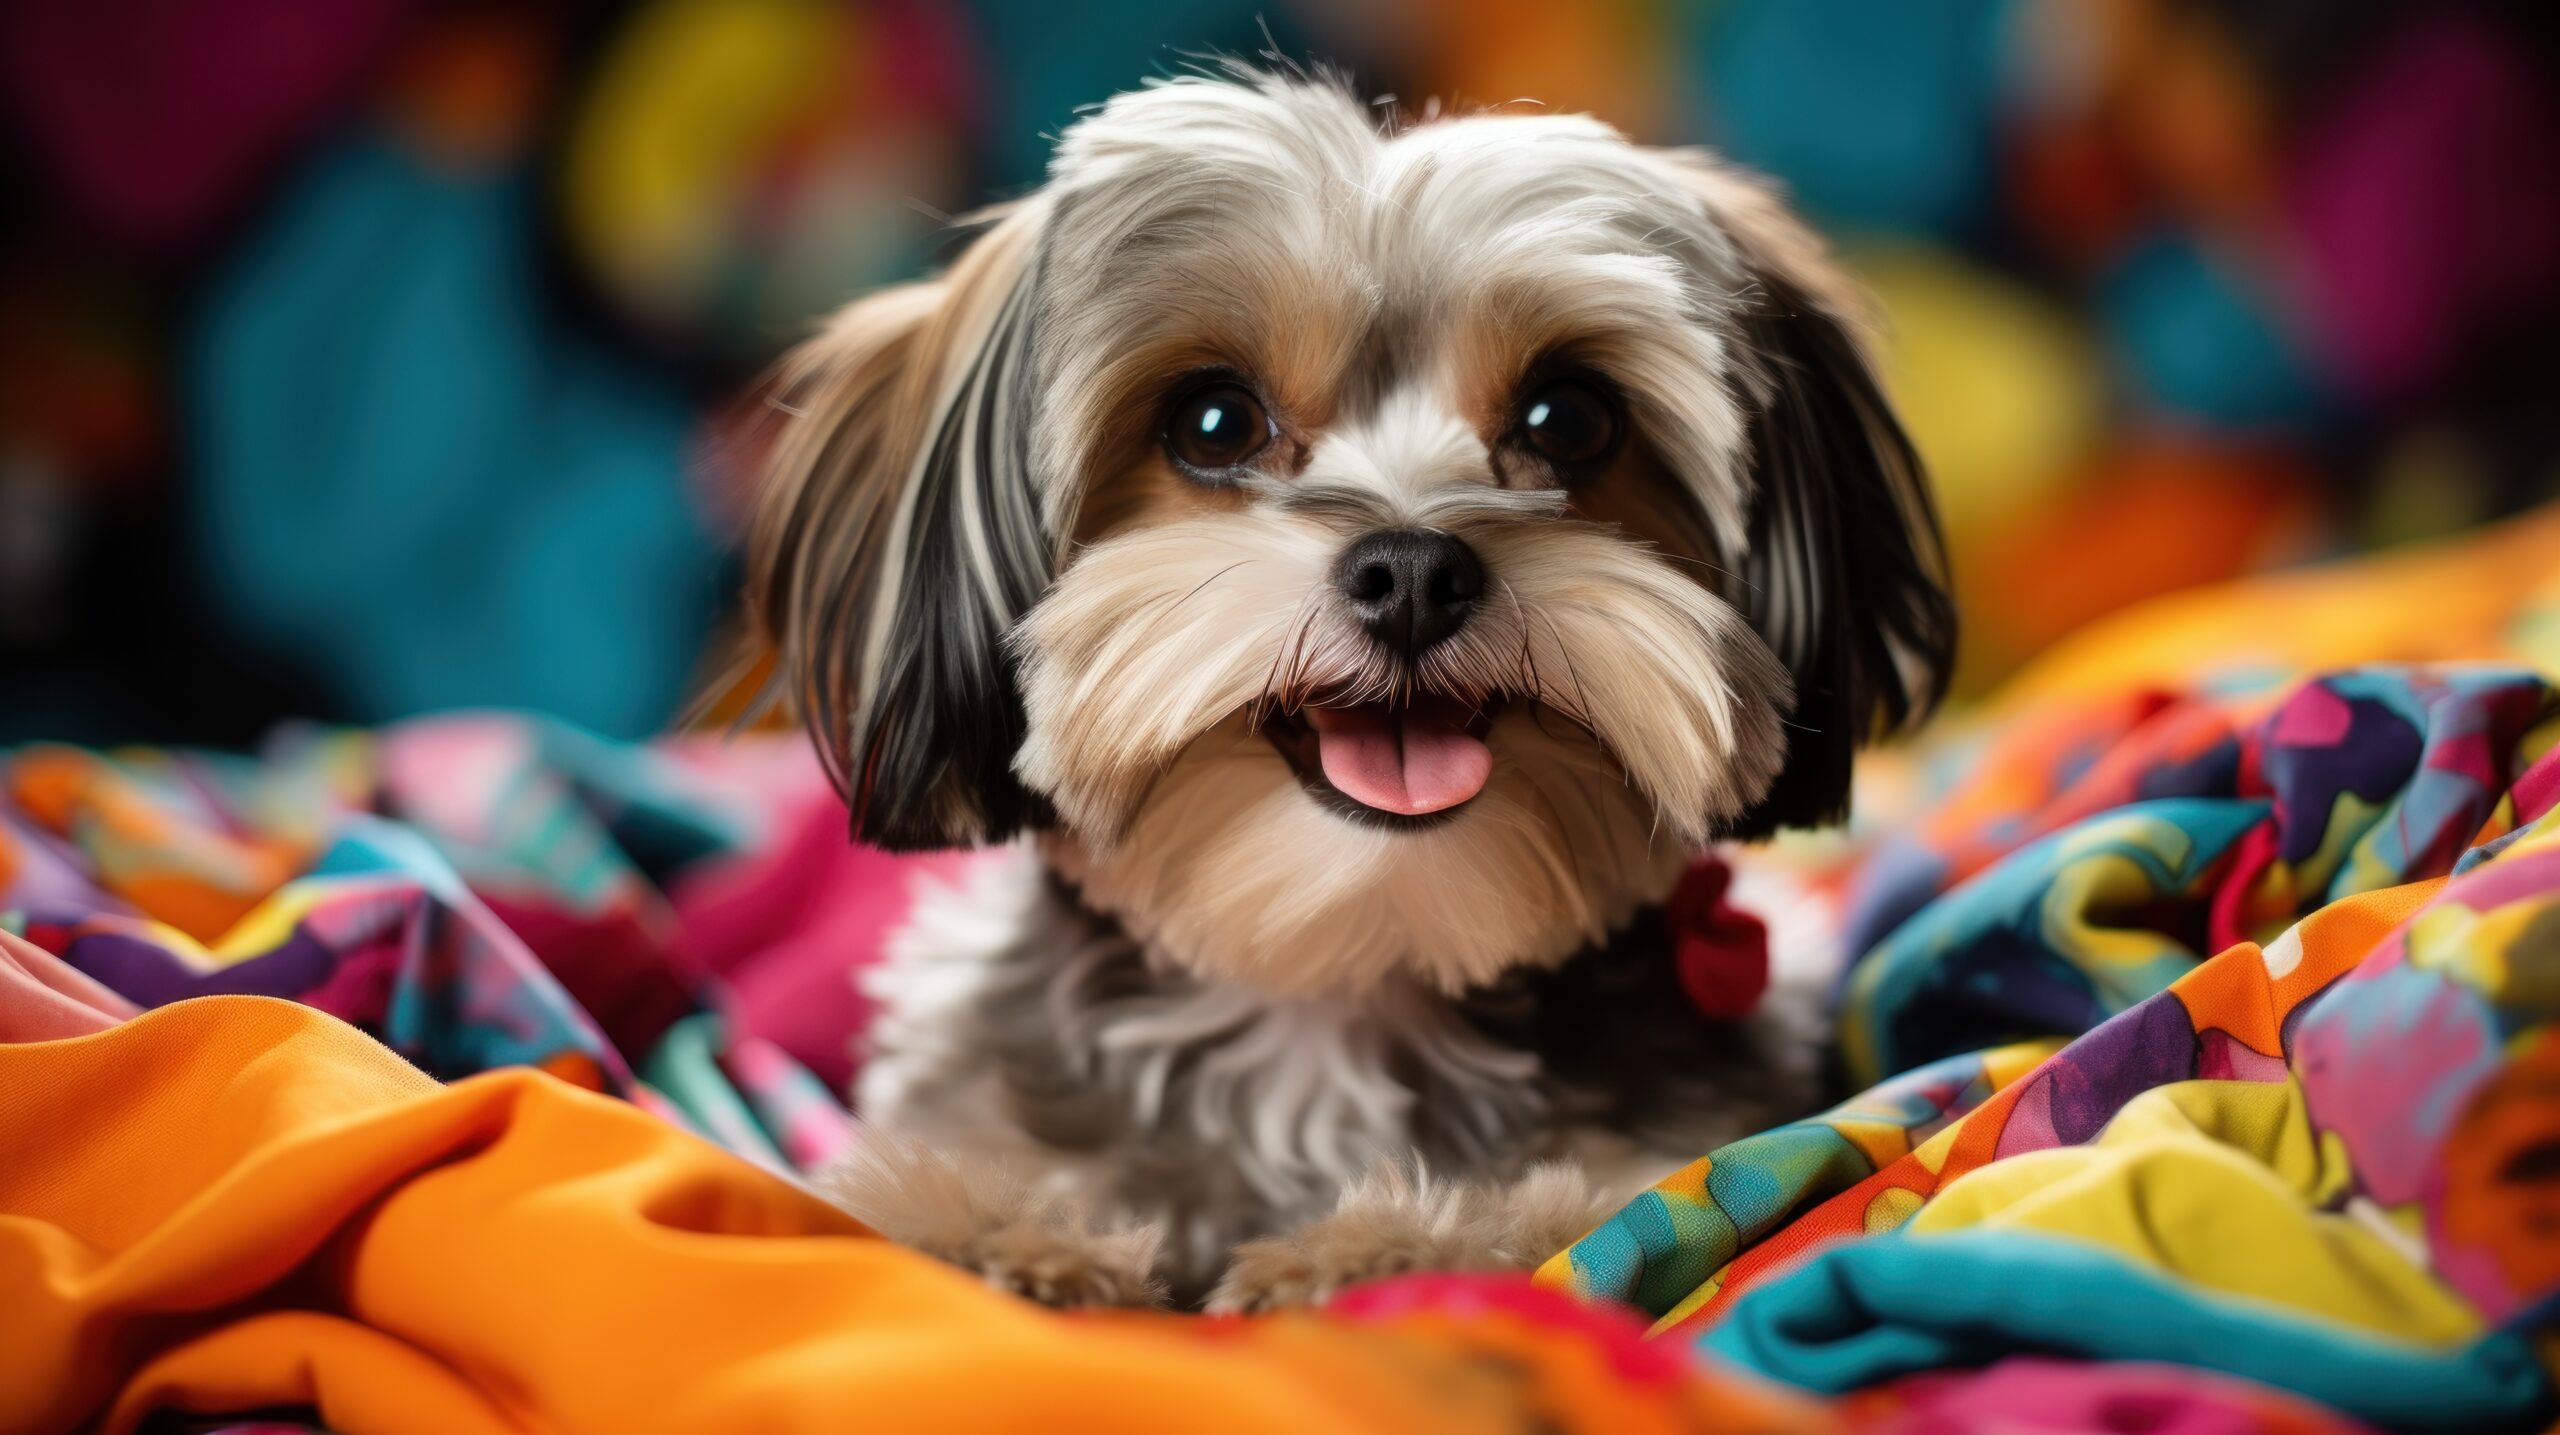 A cute shih-tsu puppy with bright eyes on a colourful blanket.